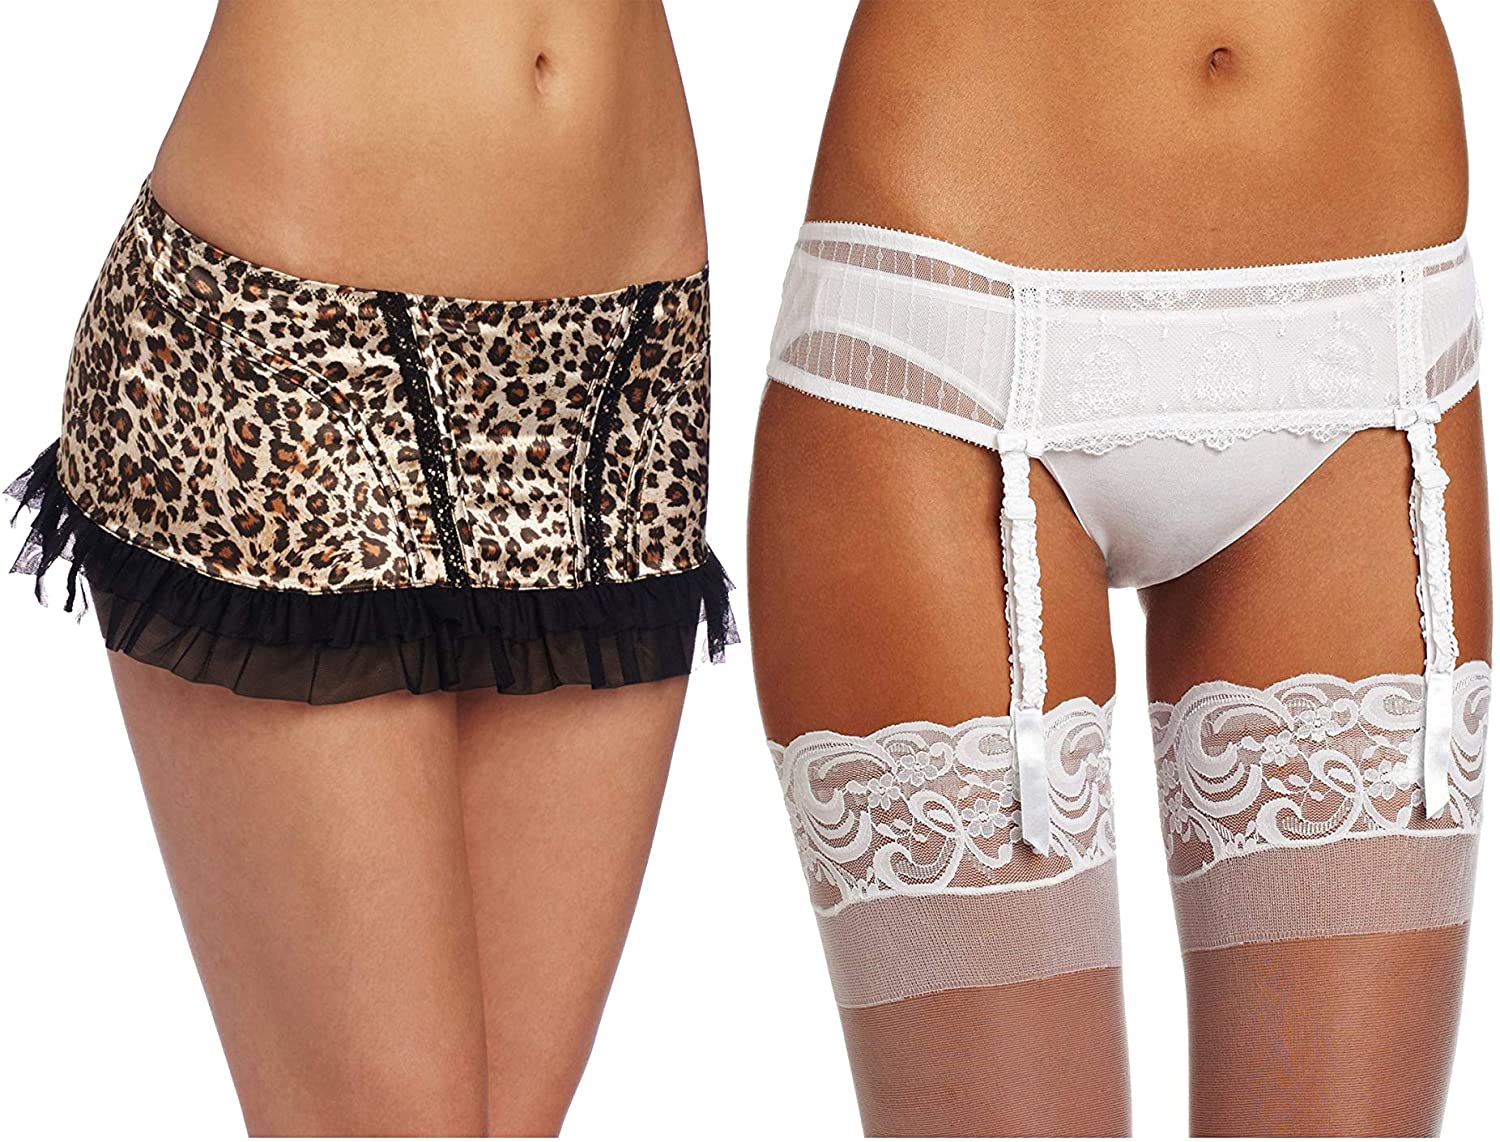 Price:$15.00    Felina Women's Sexy Lace Garter Belt and Cheetah Skirt Package (Small/Medium, White/Cheetah Print)  Clothing